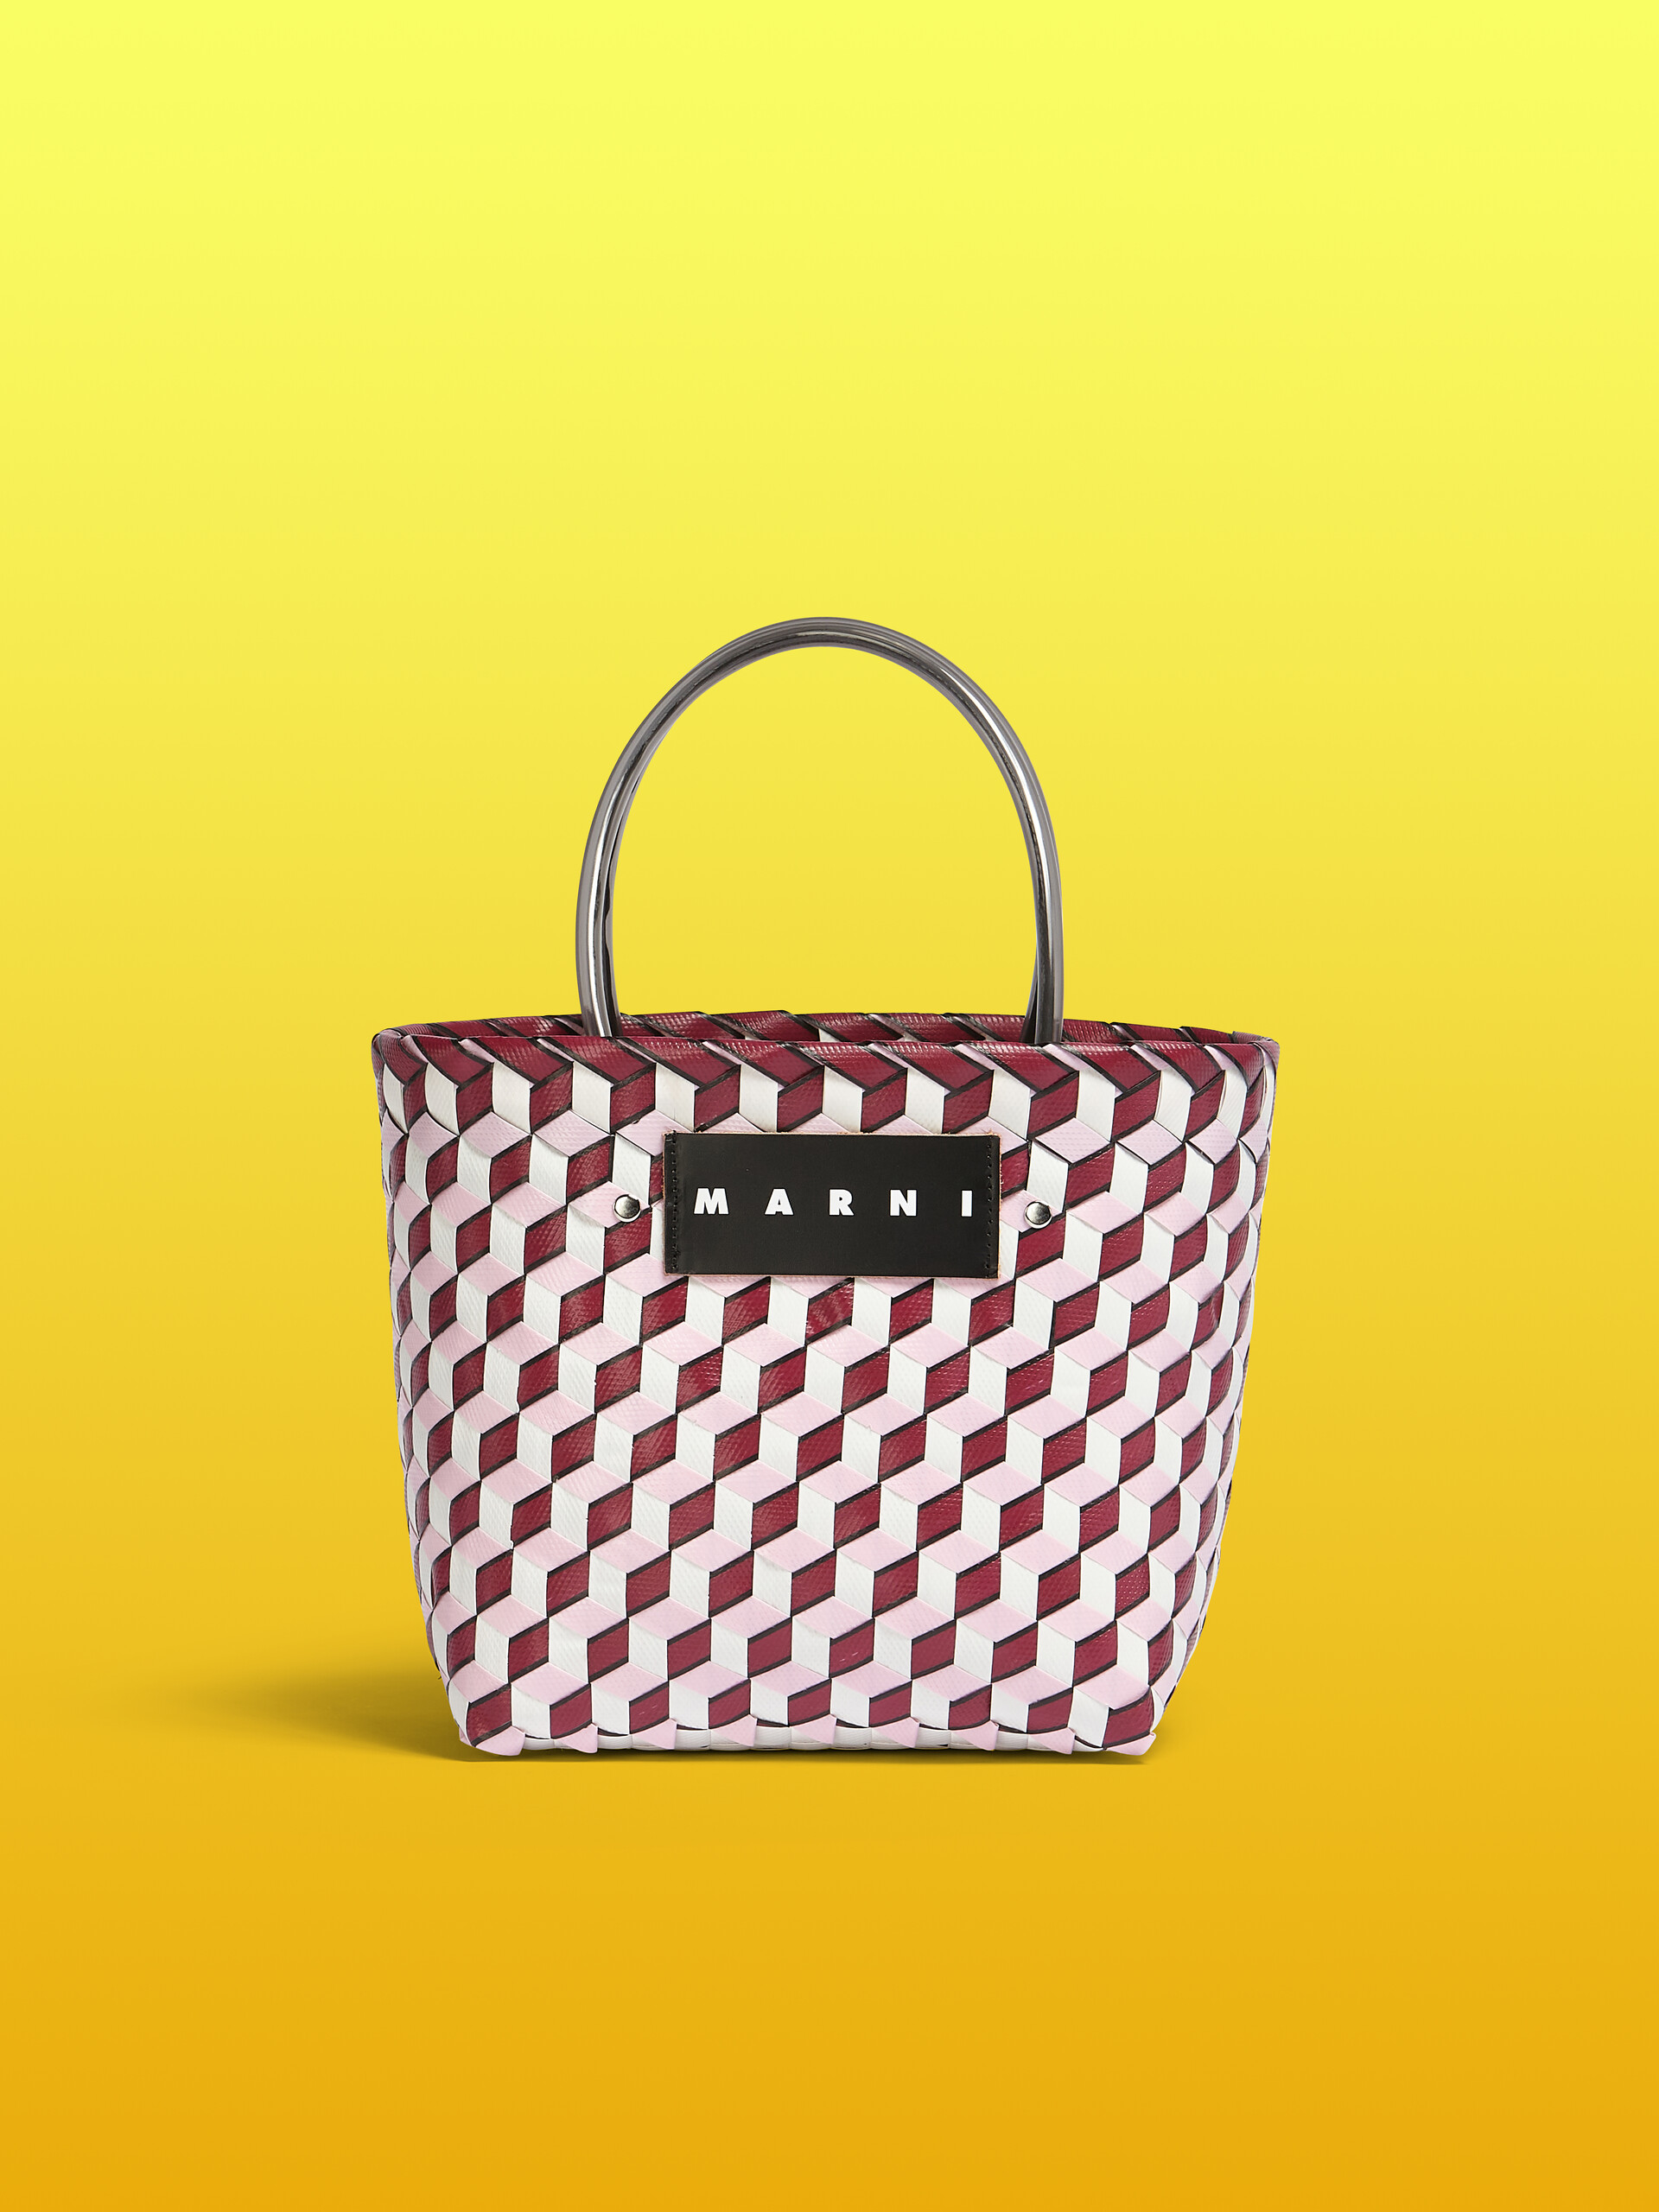 MARNI MARKET bag in burgundy cube woven material - Bags - Image 1